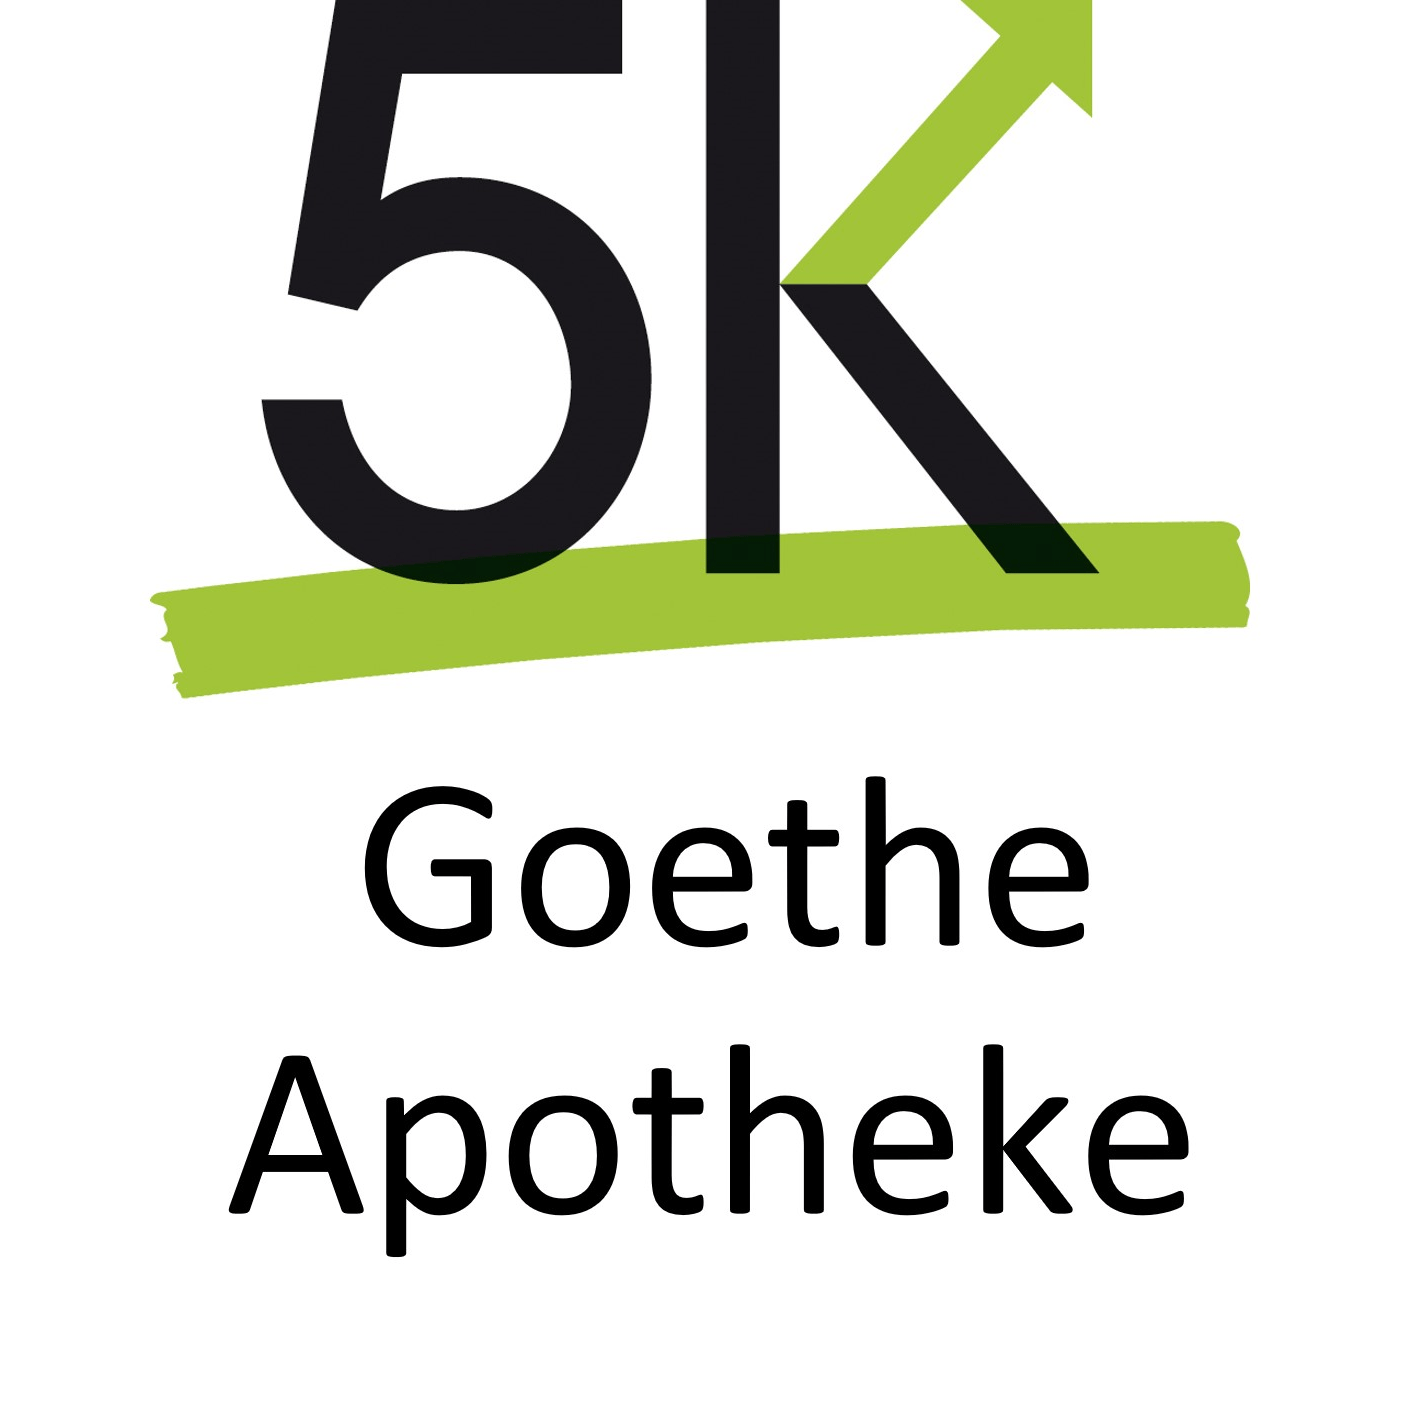 5K Goethe Apotheke in Frankfurt am Main - Logo